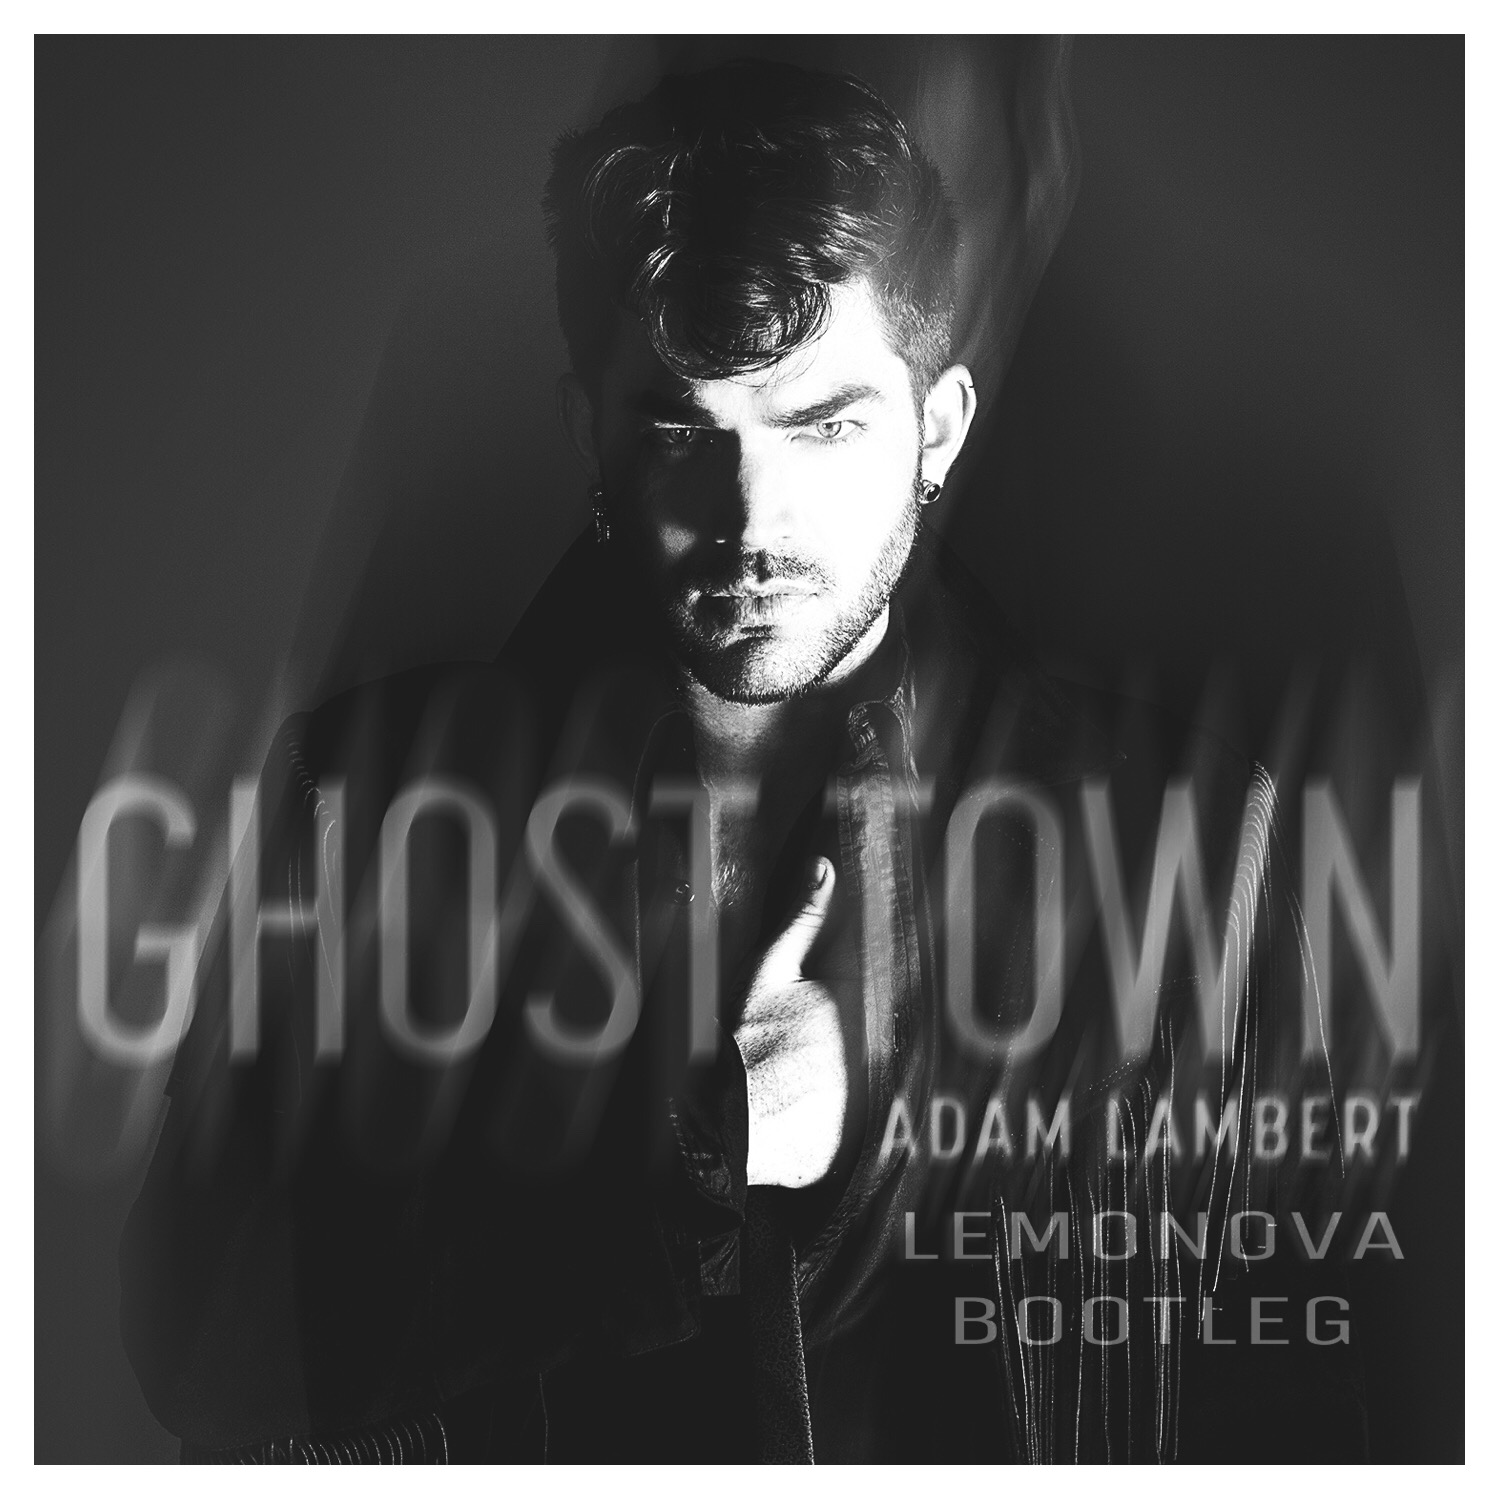 Adam Lambert - Ghost Town(Lemonova Bootleg)